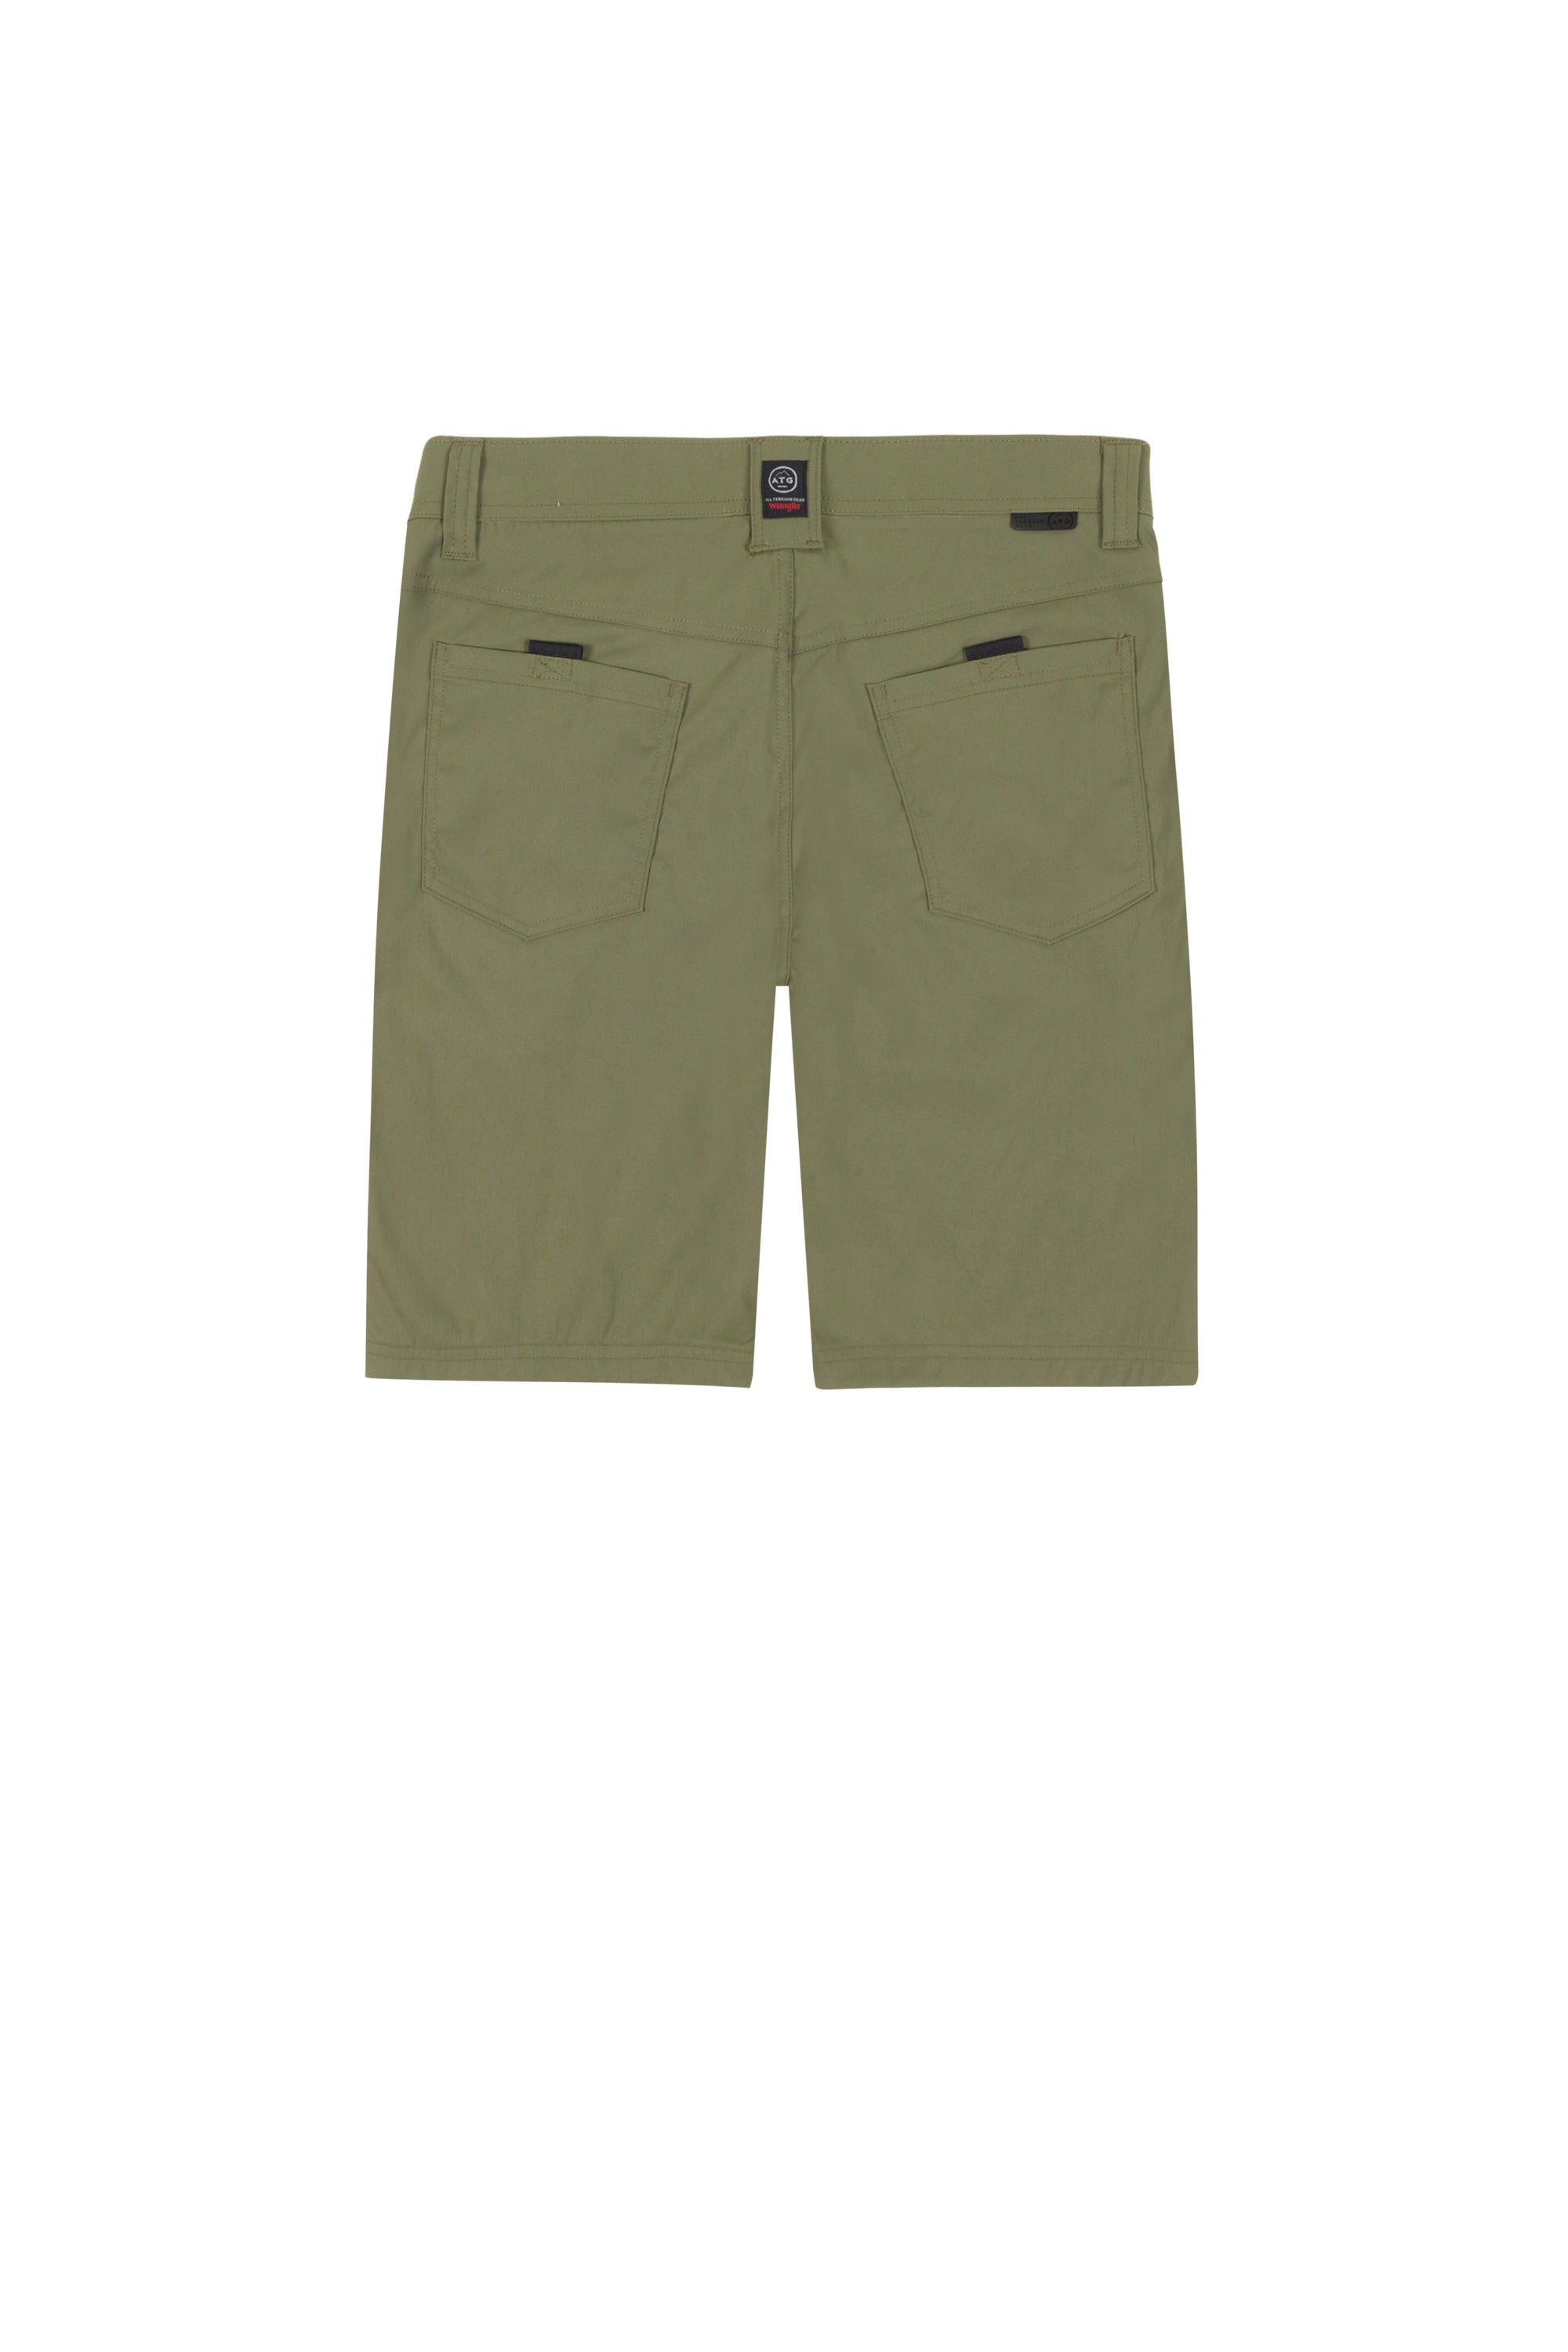 8Pkt Belted Short in Dusty Olive Shorts Wrangler   